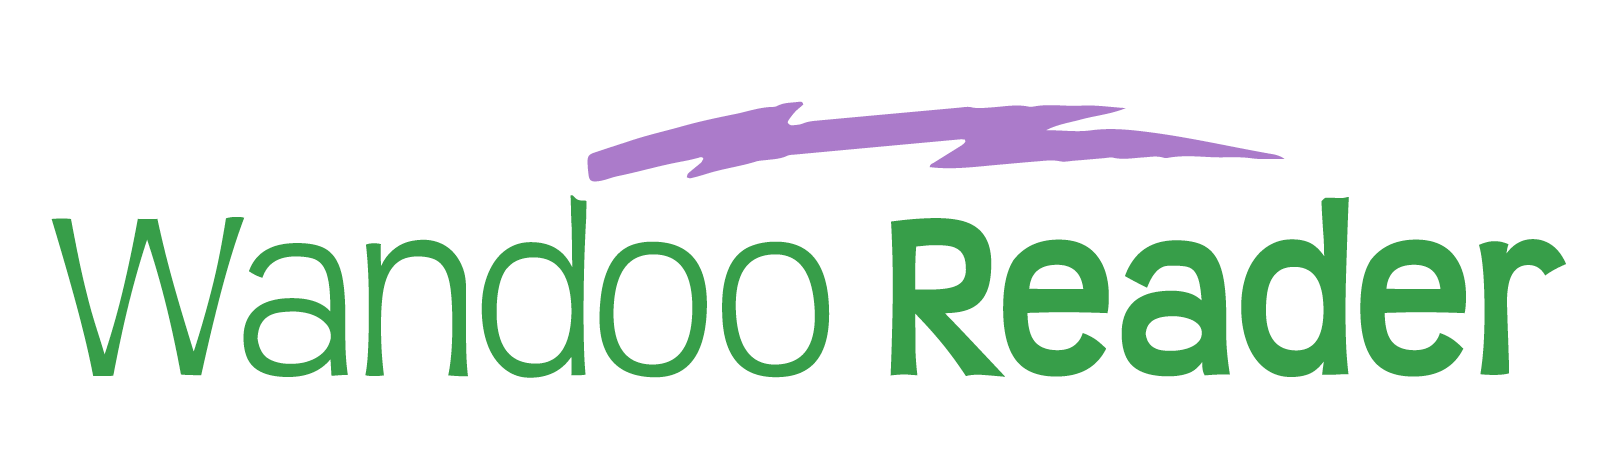 Wandoo Reader Logo Horizontal